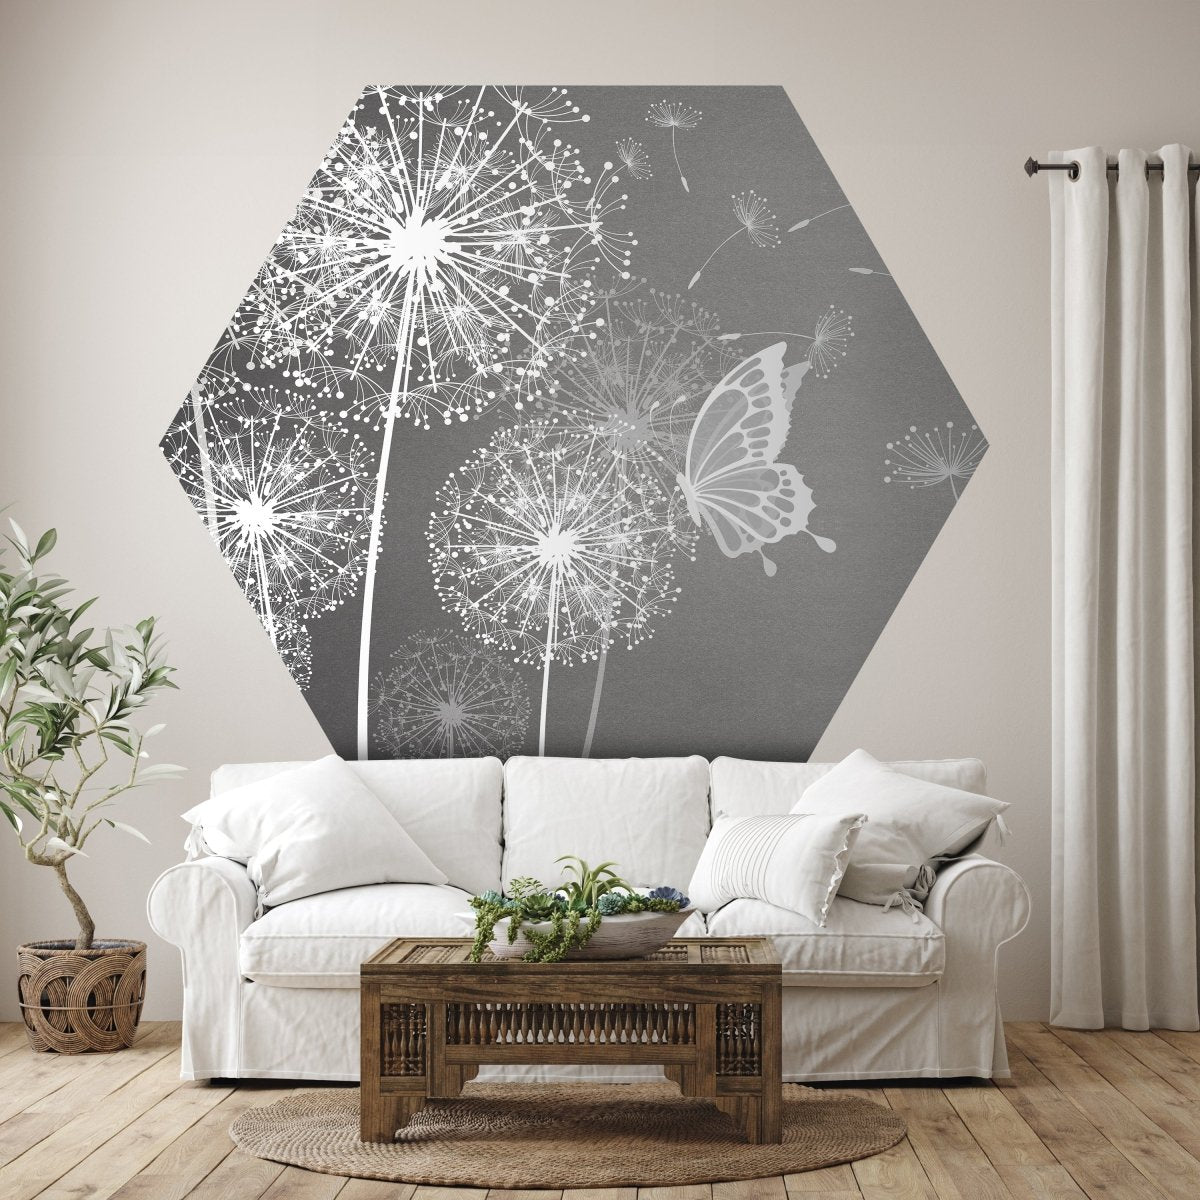 Hexagon-Fototapete Pusteblumen mit Schmetterlingen M0029 - Bild 1